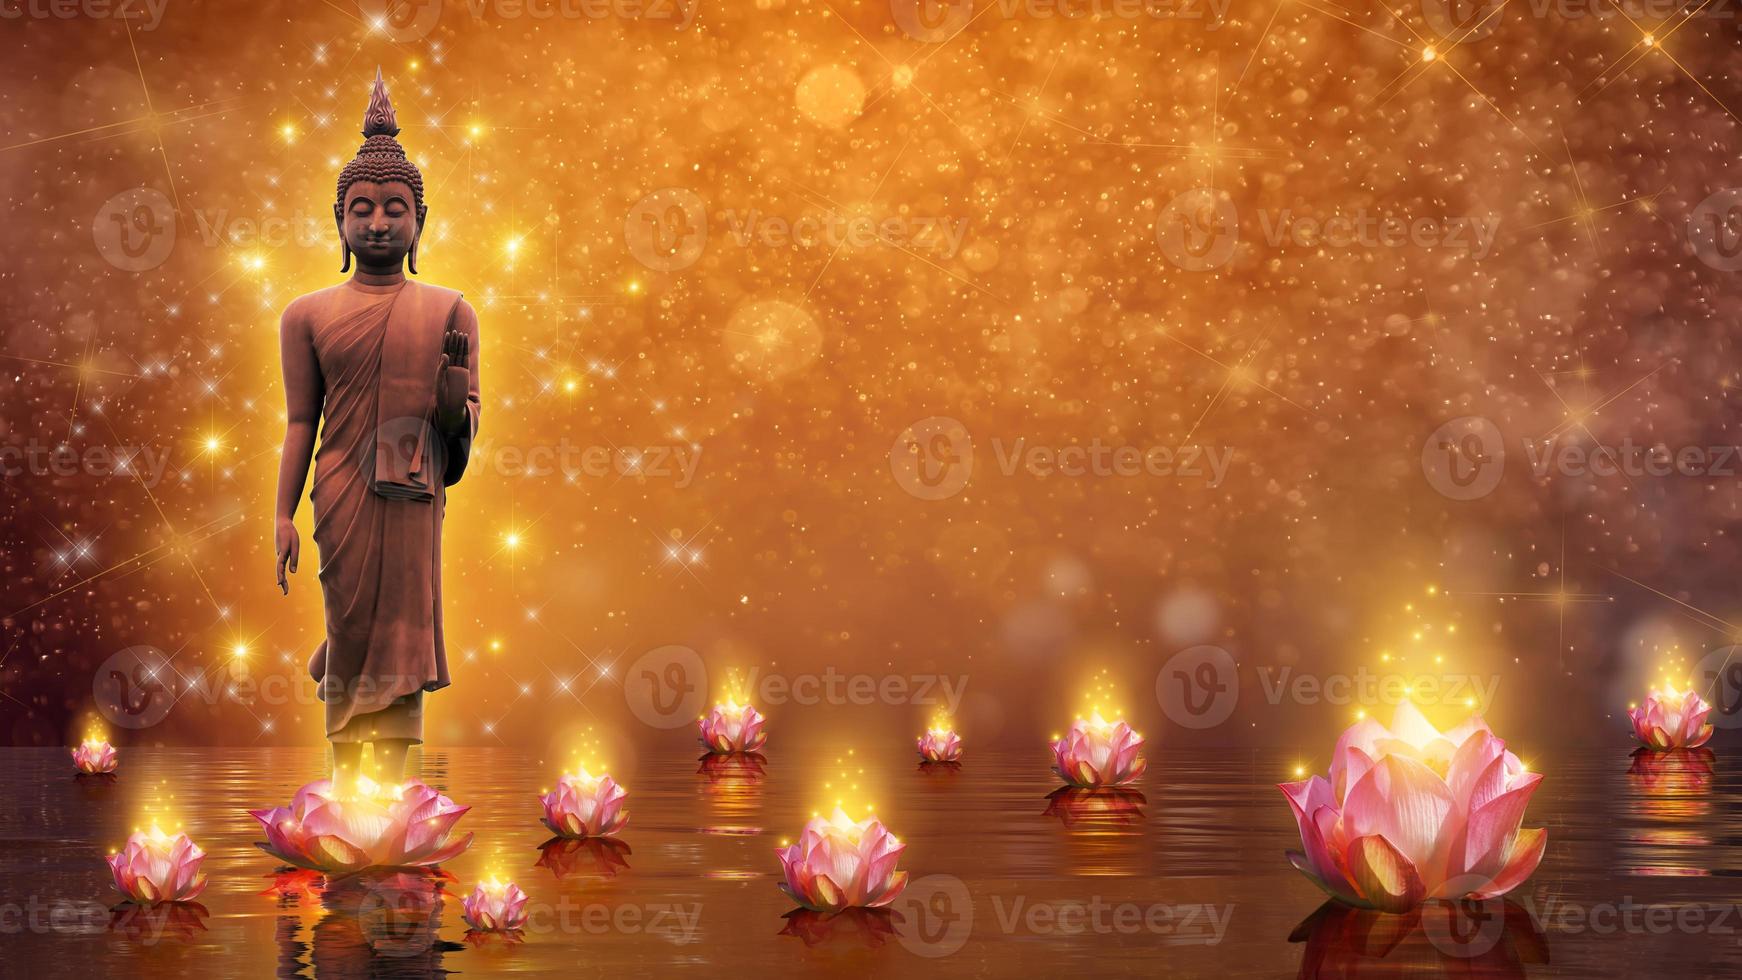 Buddha statue water lotus Buddha standing on lotus flower on orange background photo